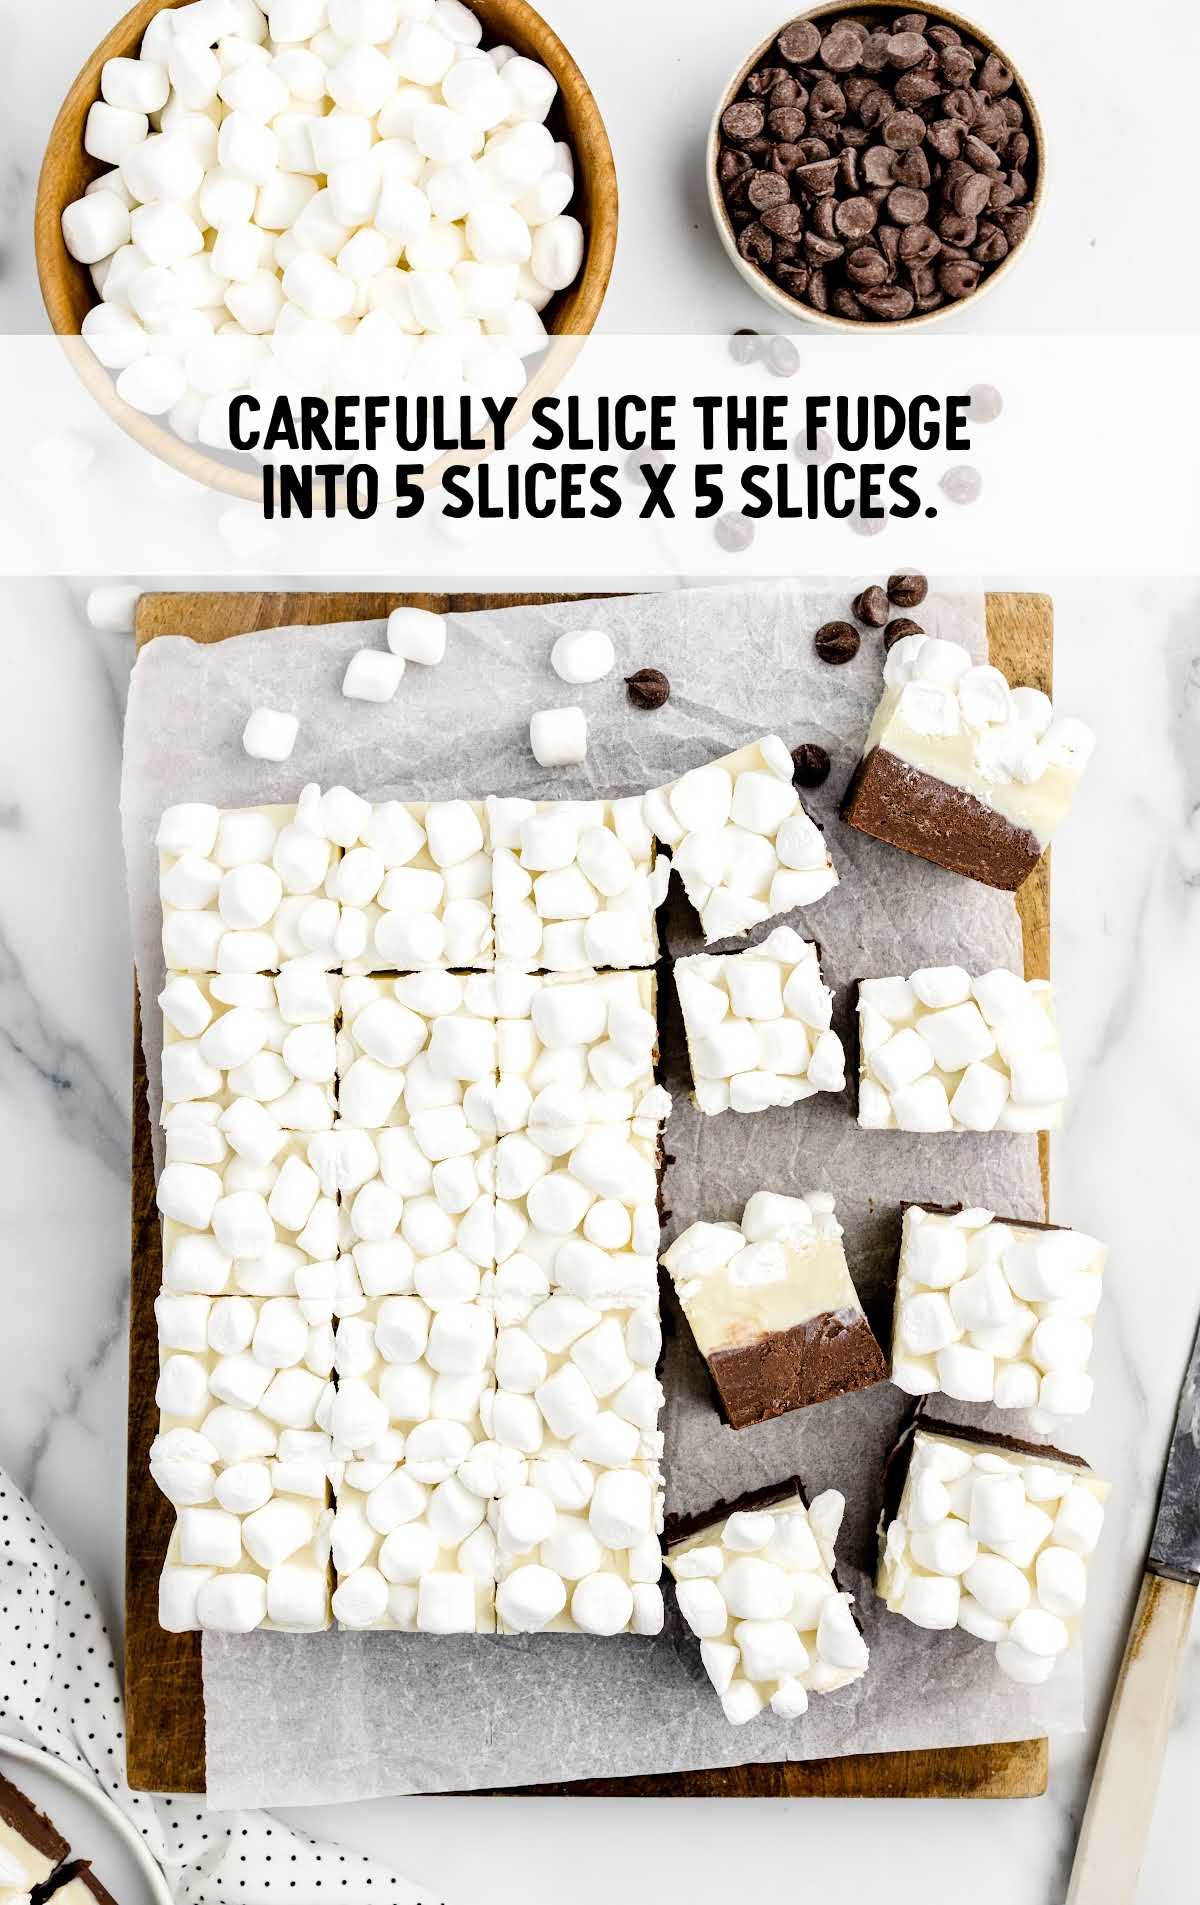 fudge sliced into 5 slices